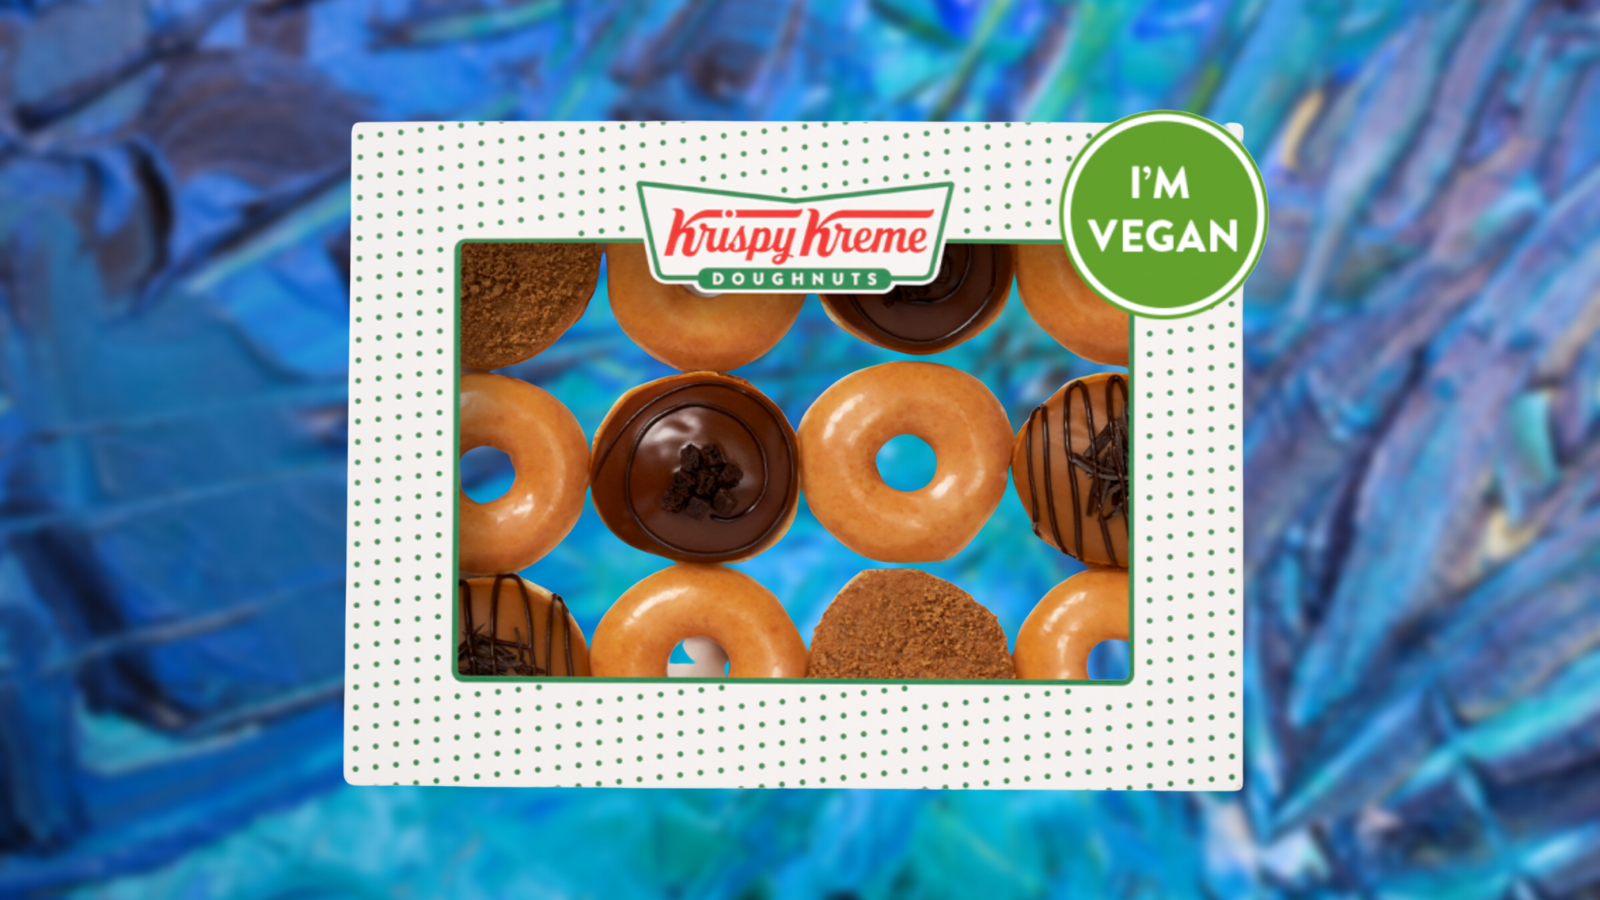 Donut giant Krispy Kreme has launched three new vegan donuts